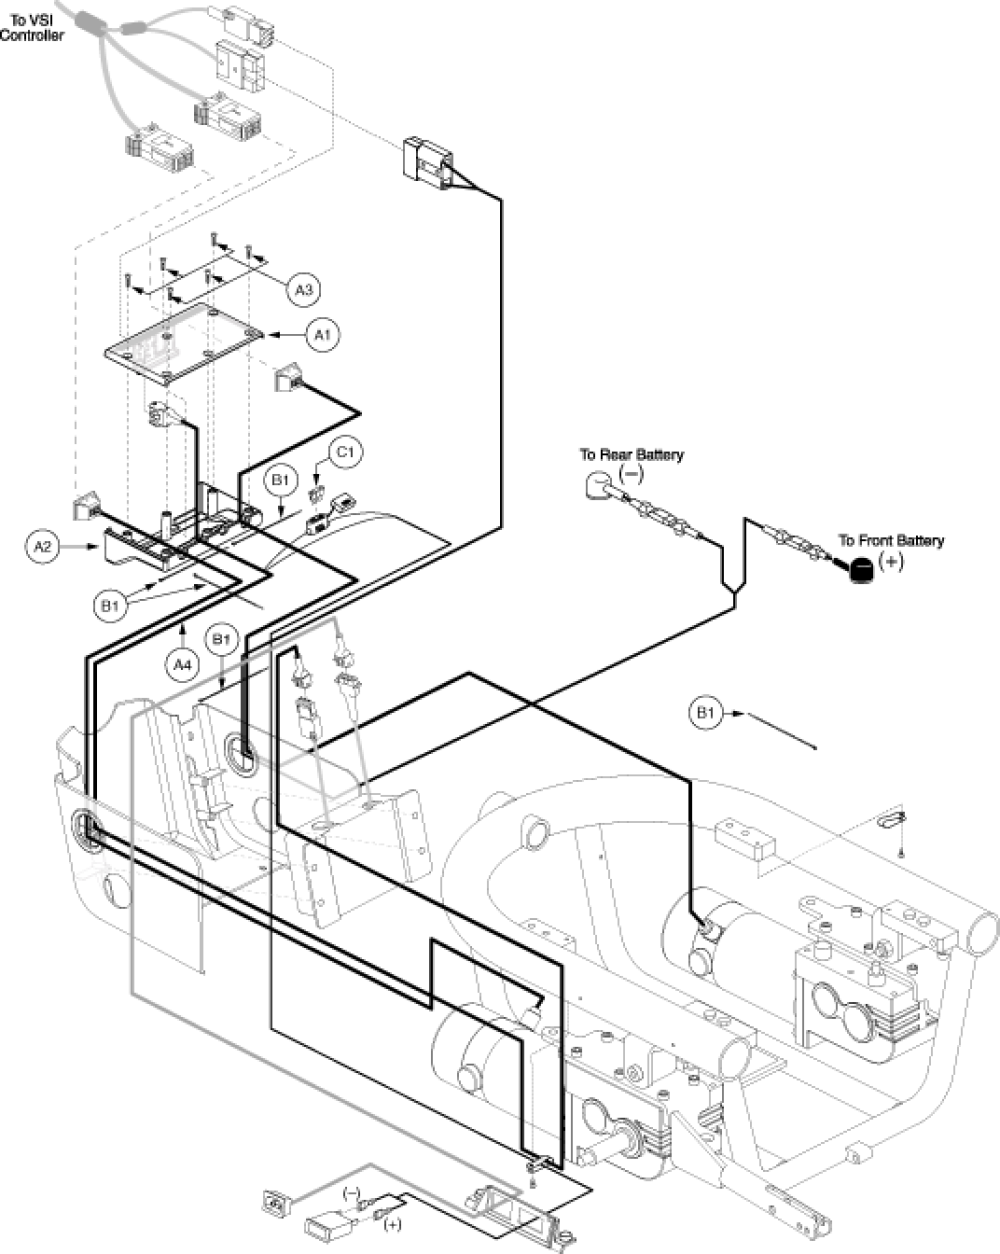 Electronics Tray Assembly - Vsi, Standard parts diagram